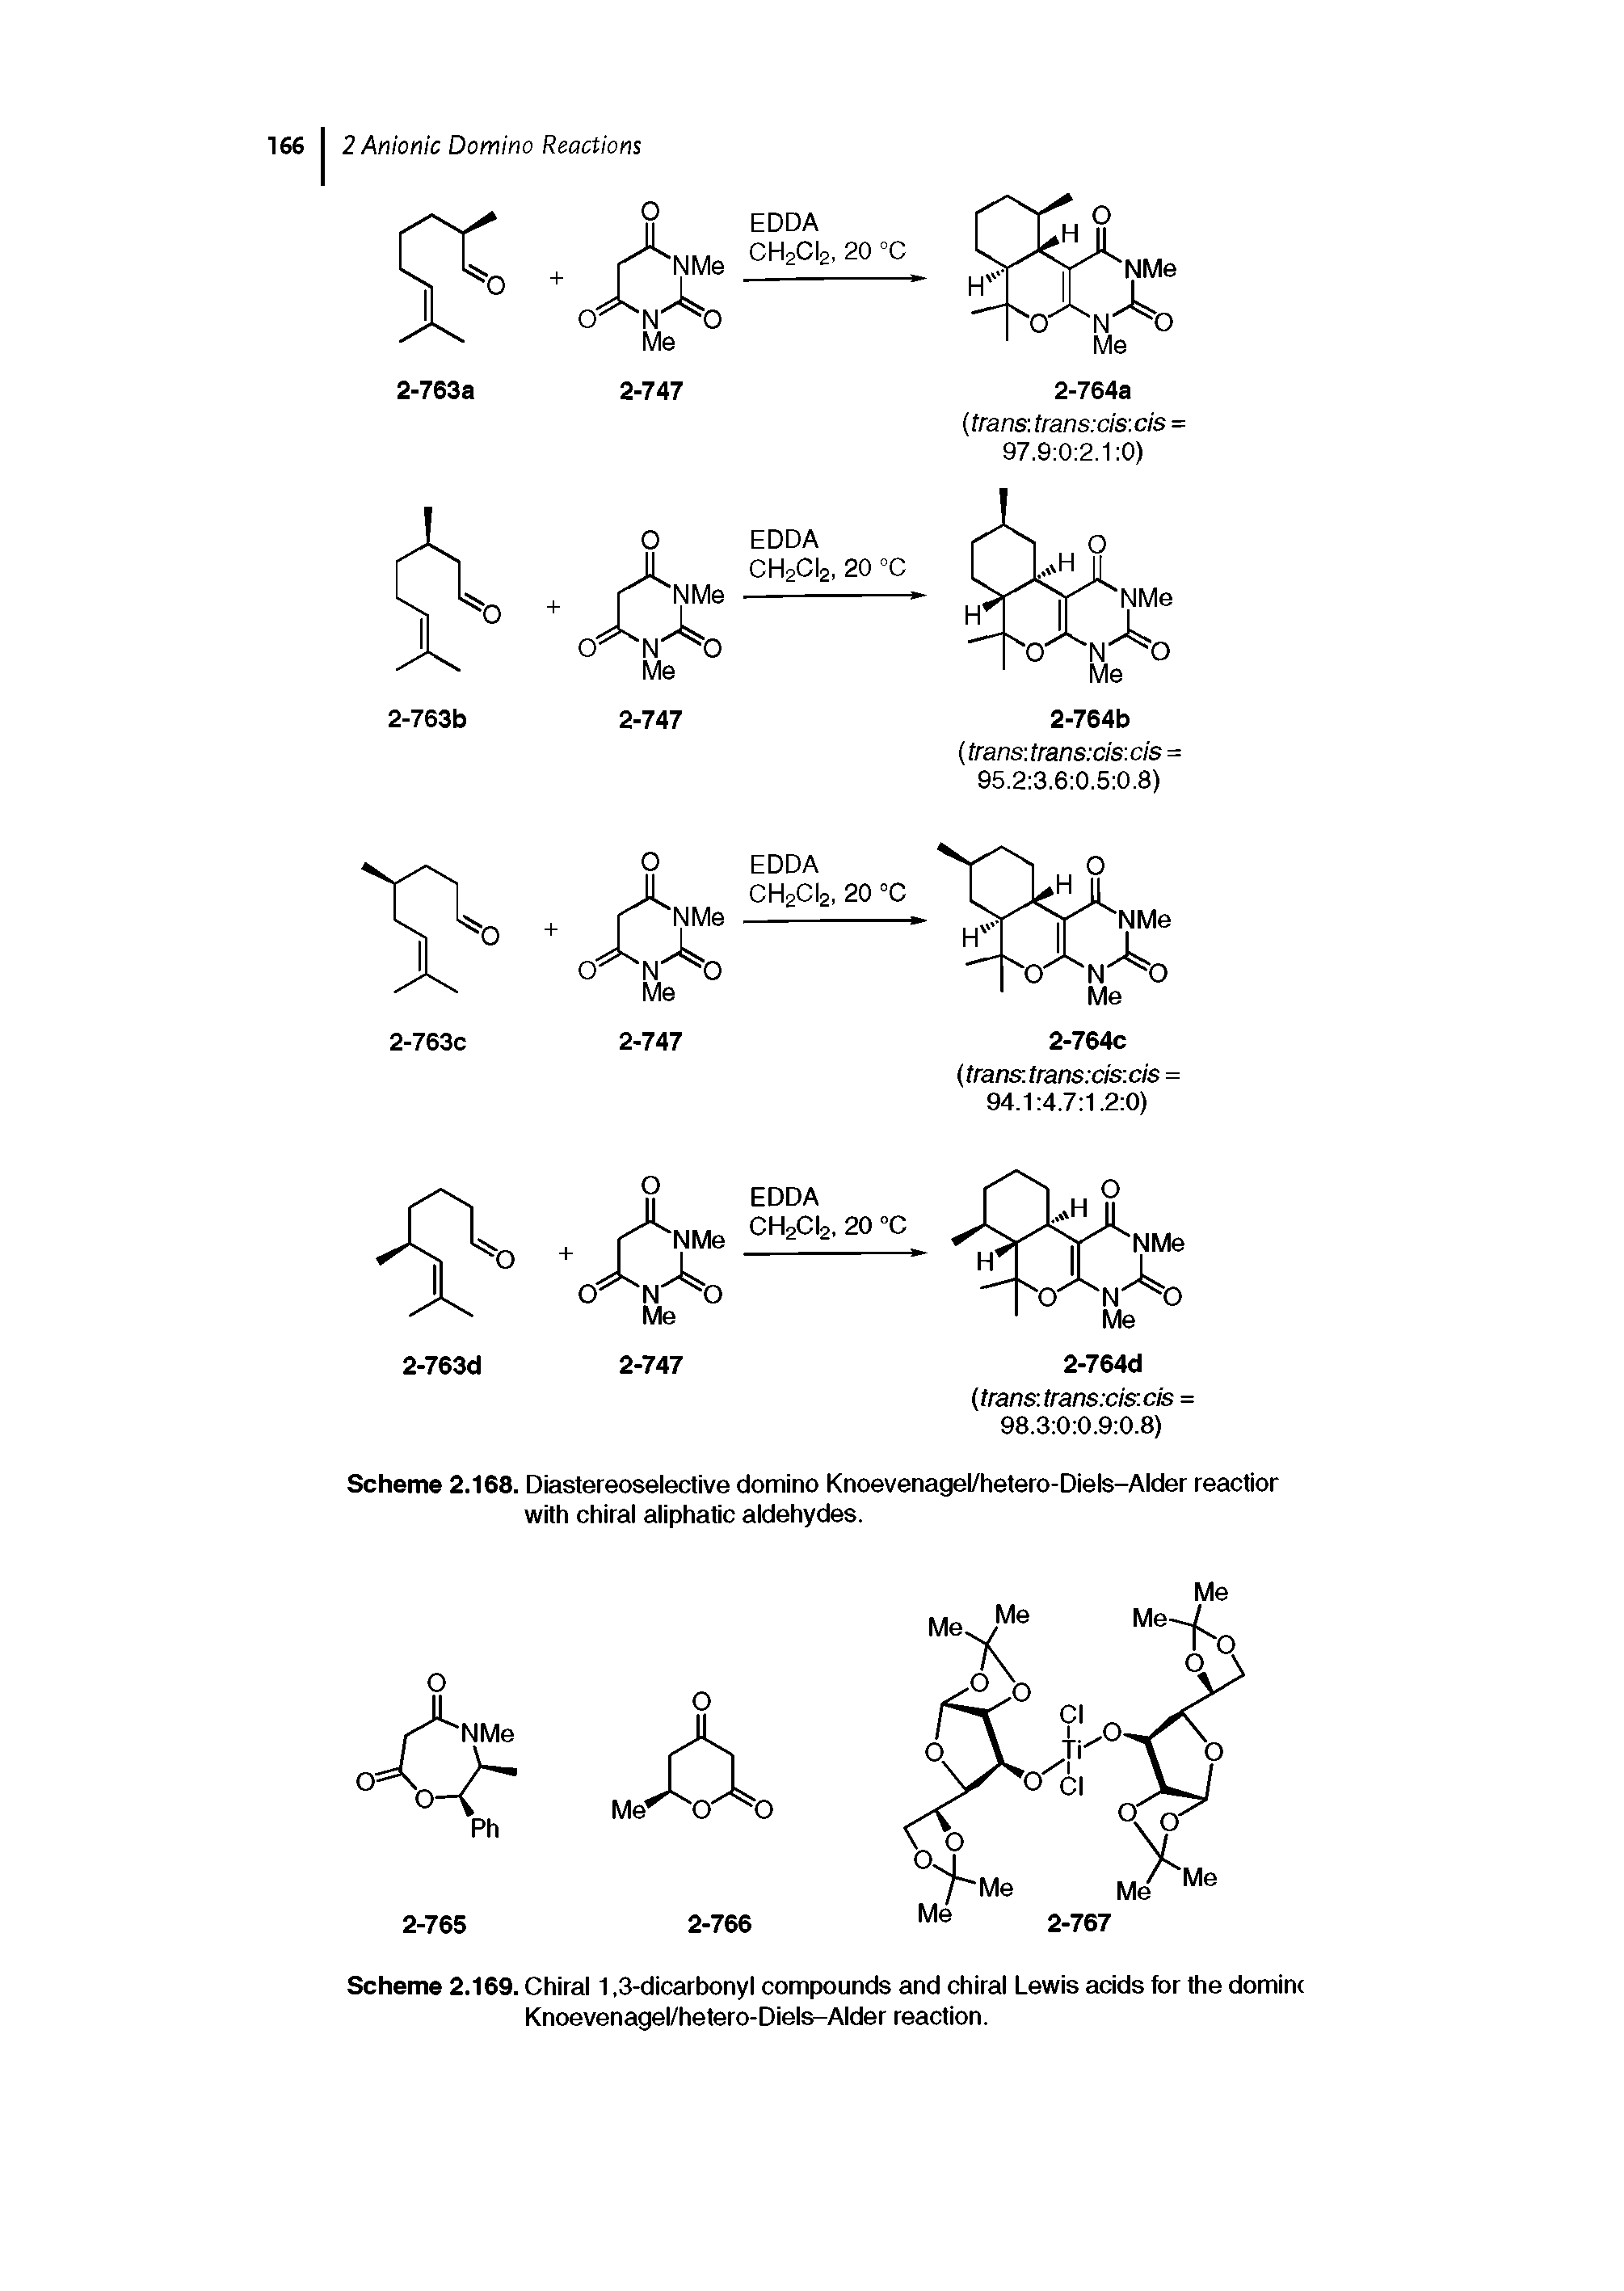 Scheme 2.169. Chiral 1,3-dicarbonyl compounds and chiral Lewis acids for the dominr Knoevenagel/hetero-Diels-Alder reaction.